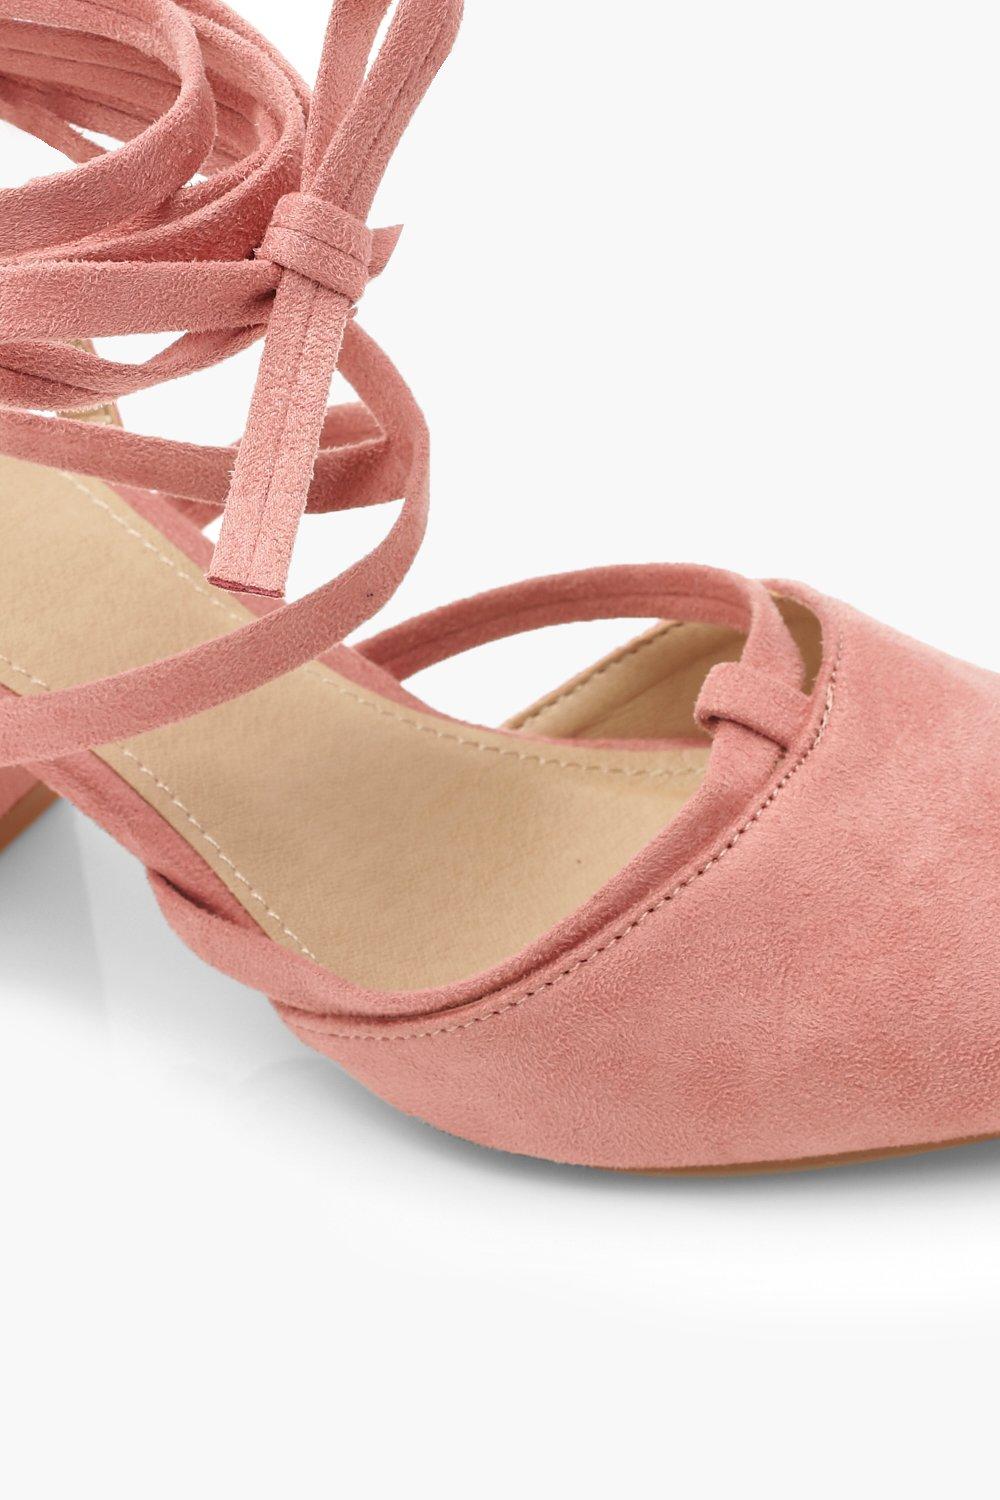 blush pink pointed toe heels